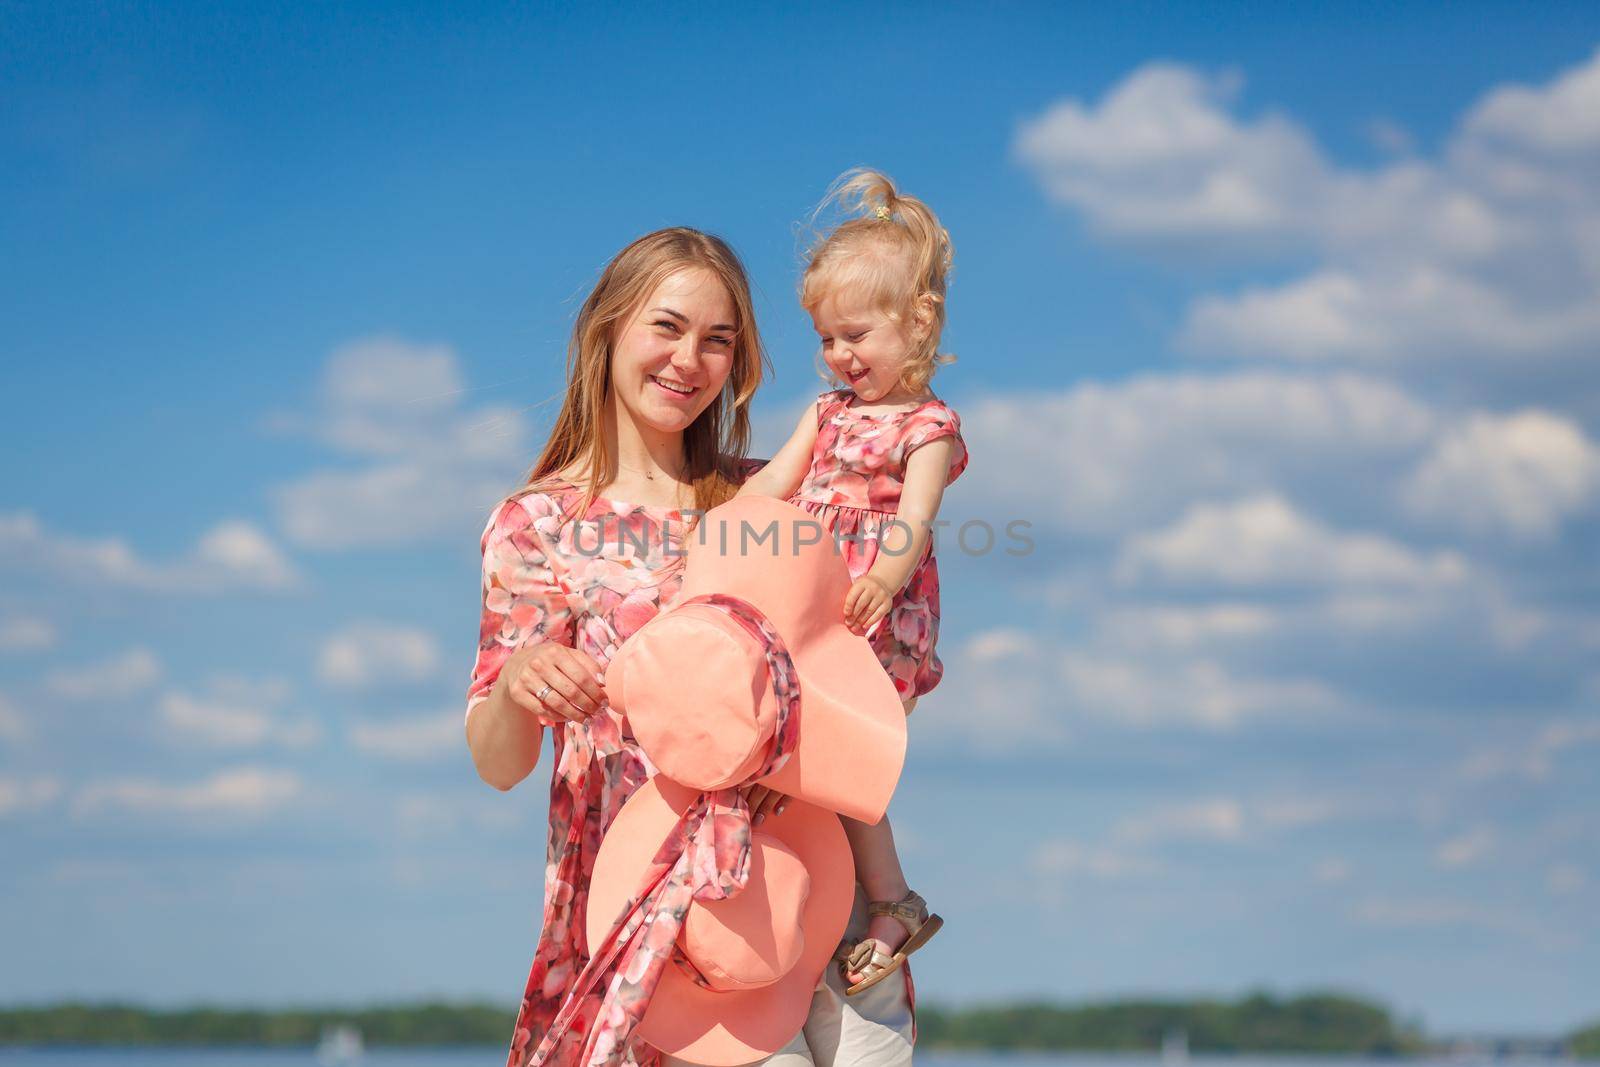 A charming girl in a light summer sundress walks on the sandy beach with her little daughter. Enjoys warm sunny summer days.